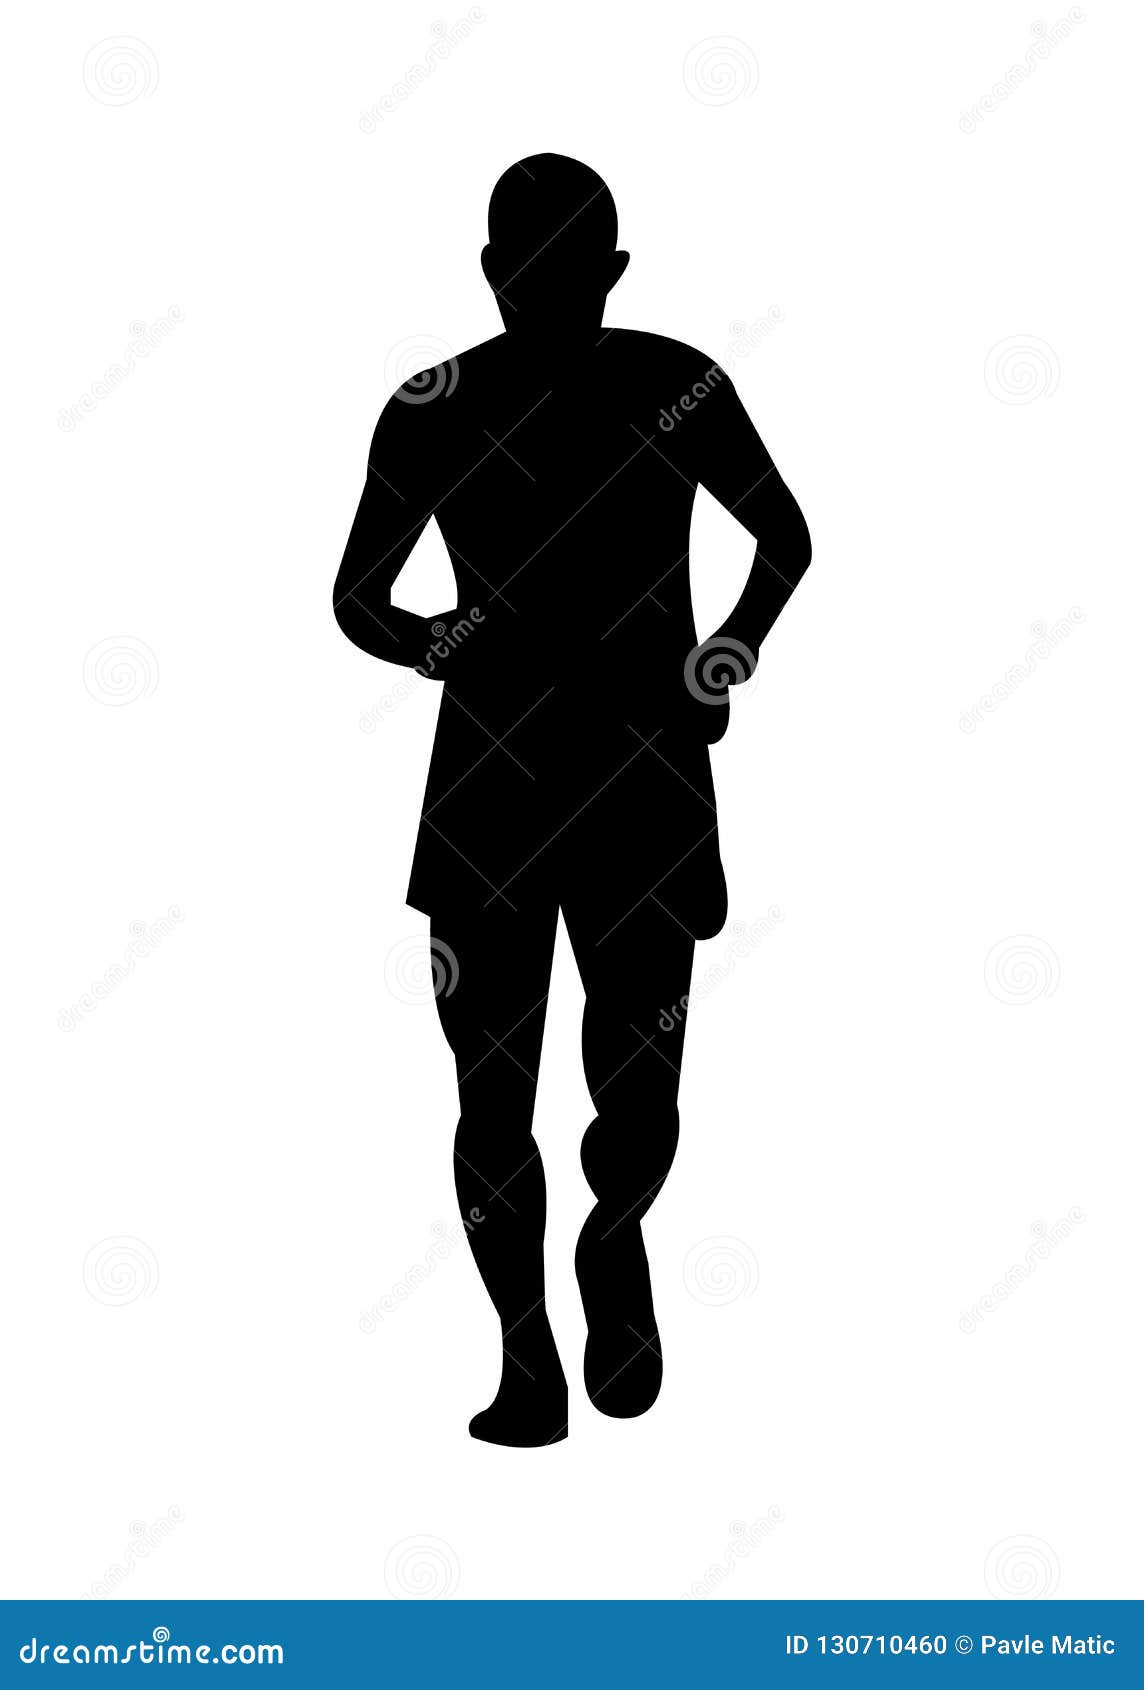 Man Jogging - Black Silhouette Cartoon Vector | CartoonDealer.com #5778487